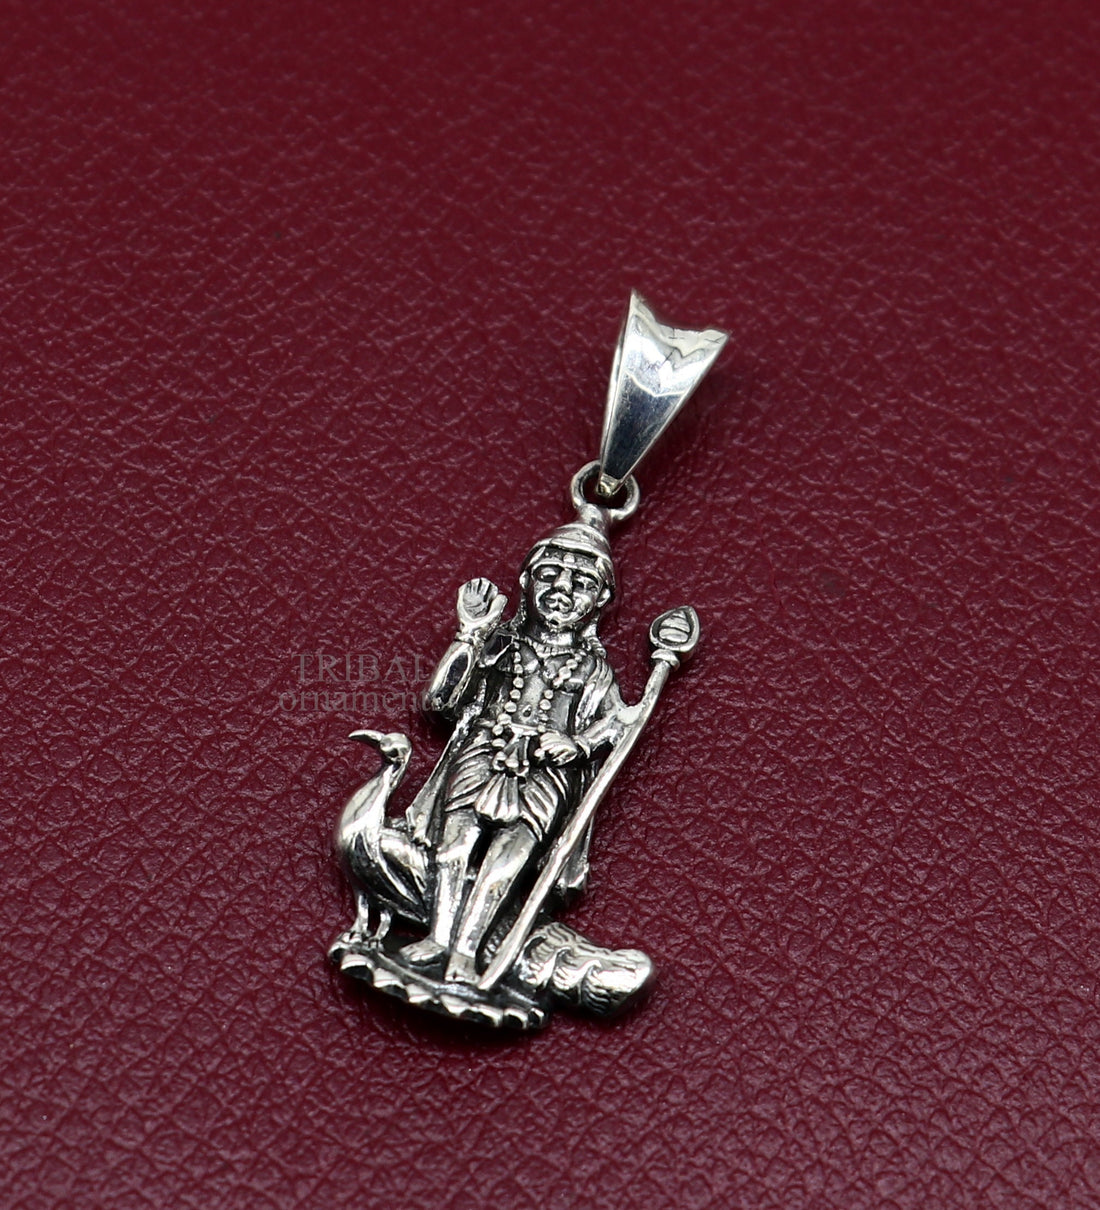 925 sterling silver Divine lord murugan KARTIKEYA pendant, excellent vintage designer silver handmade elegant pendant jewelry ssp1614 - TRIBAL ORNAMENTS